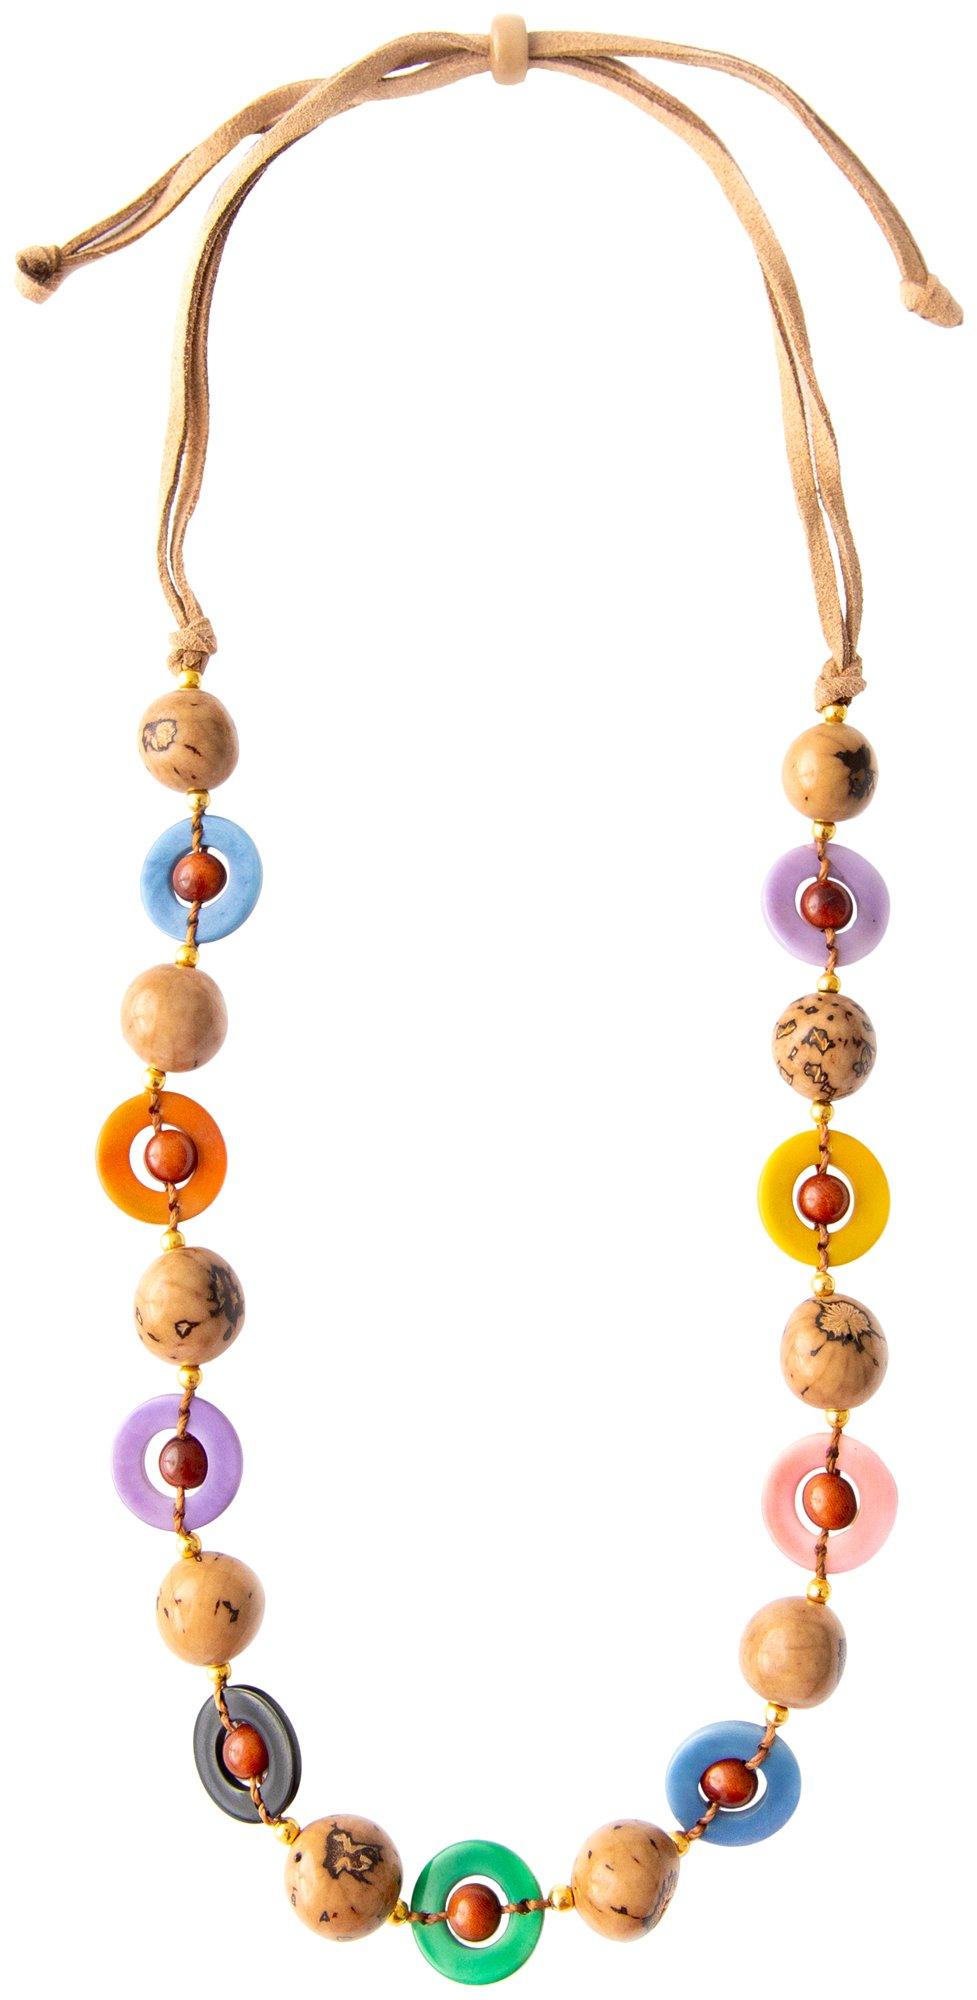 24 In. Organic Orbital Beads Adjustable Cord Necklace